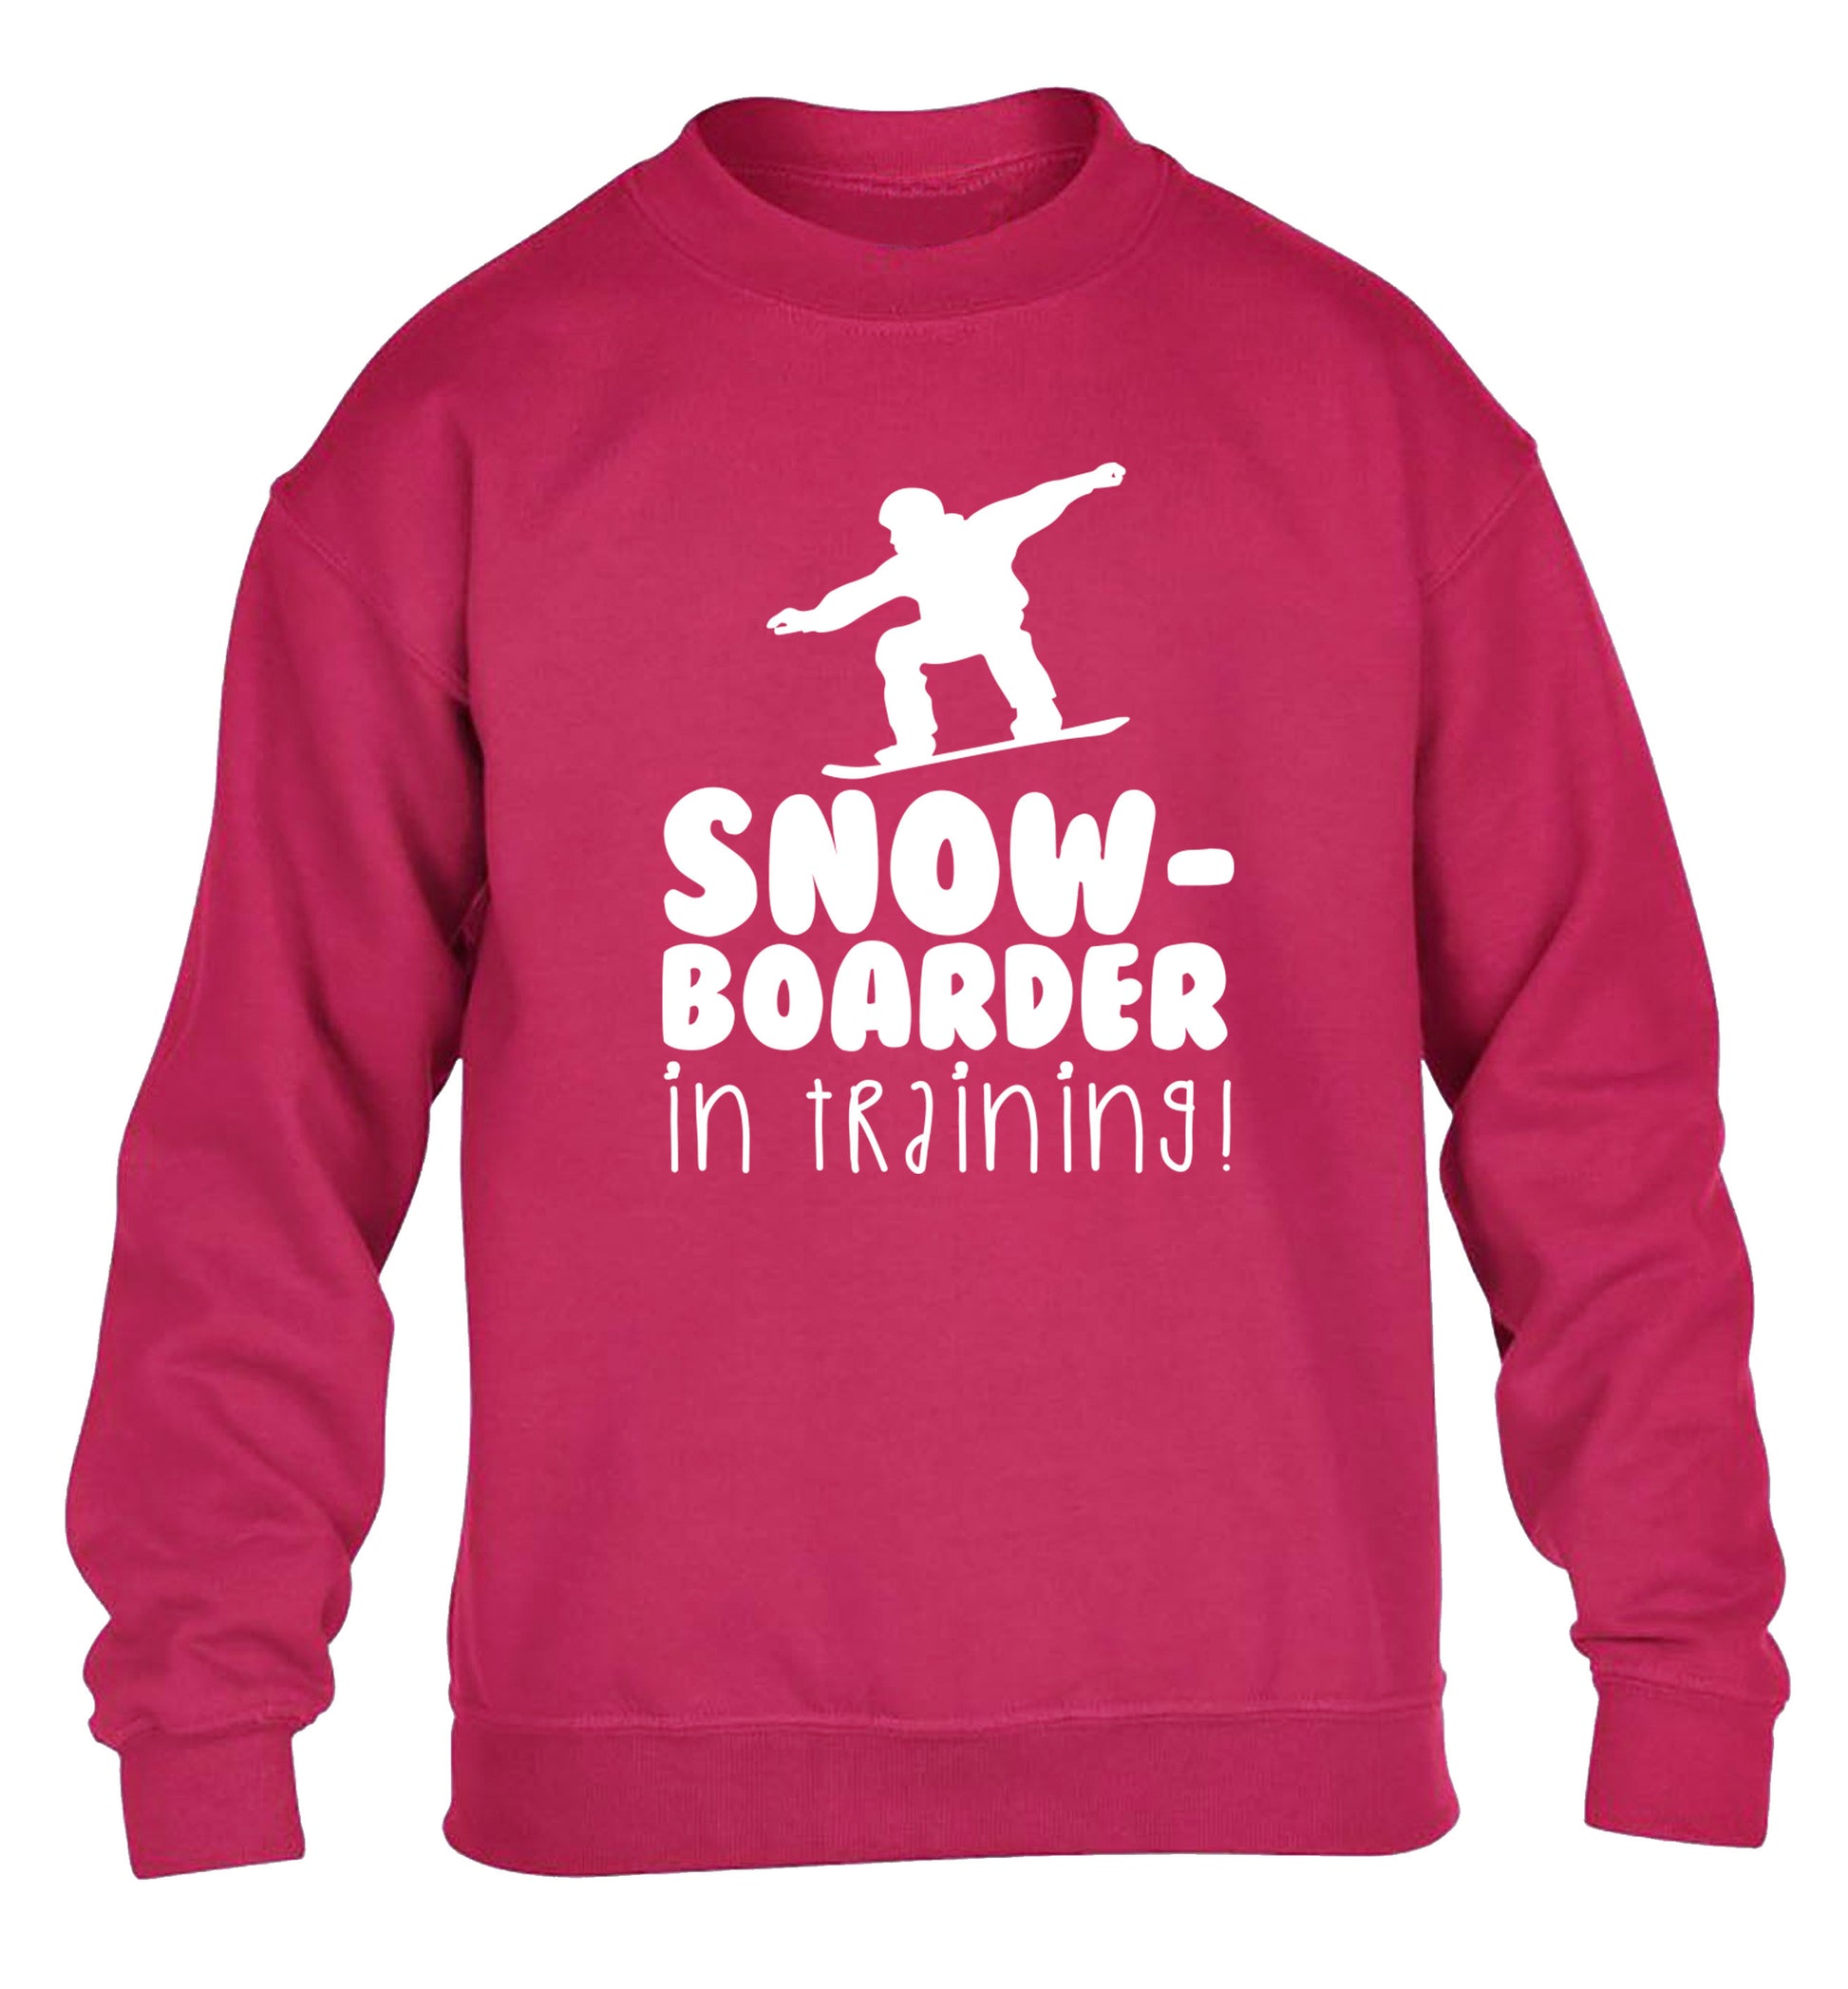 Snowboarder in training children's pink sweater 12-14 Years